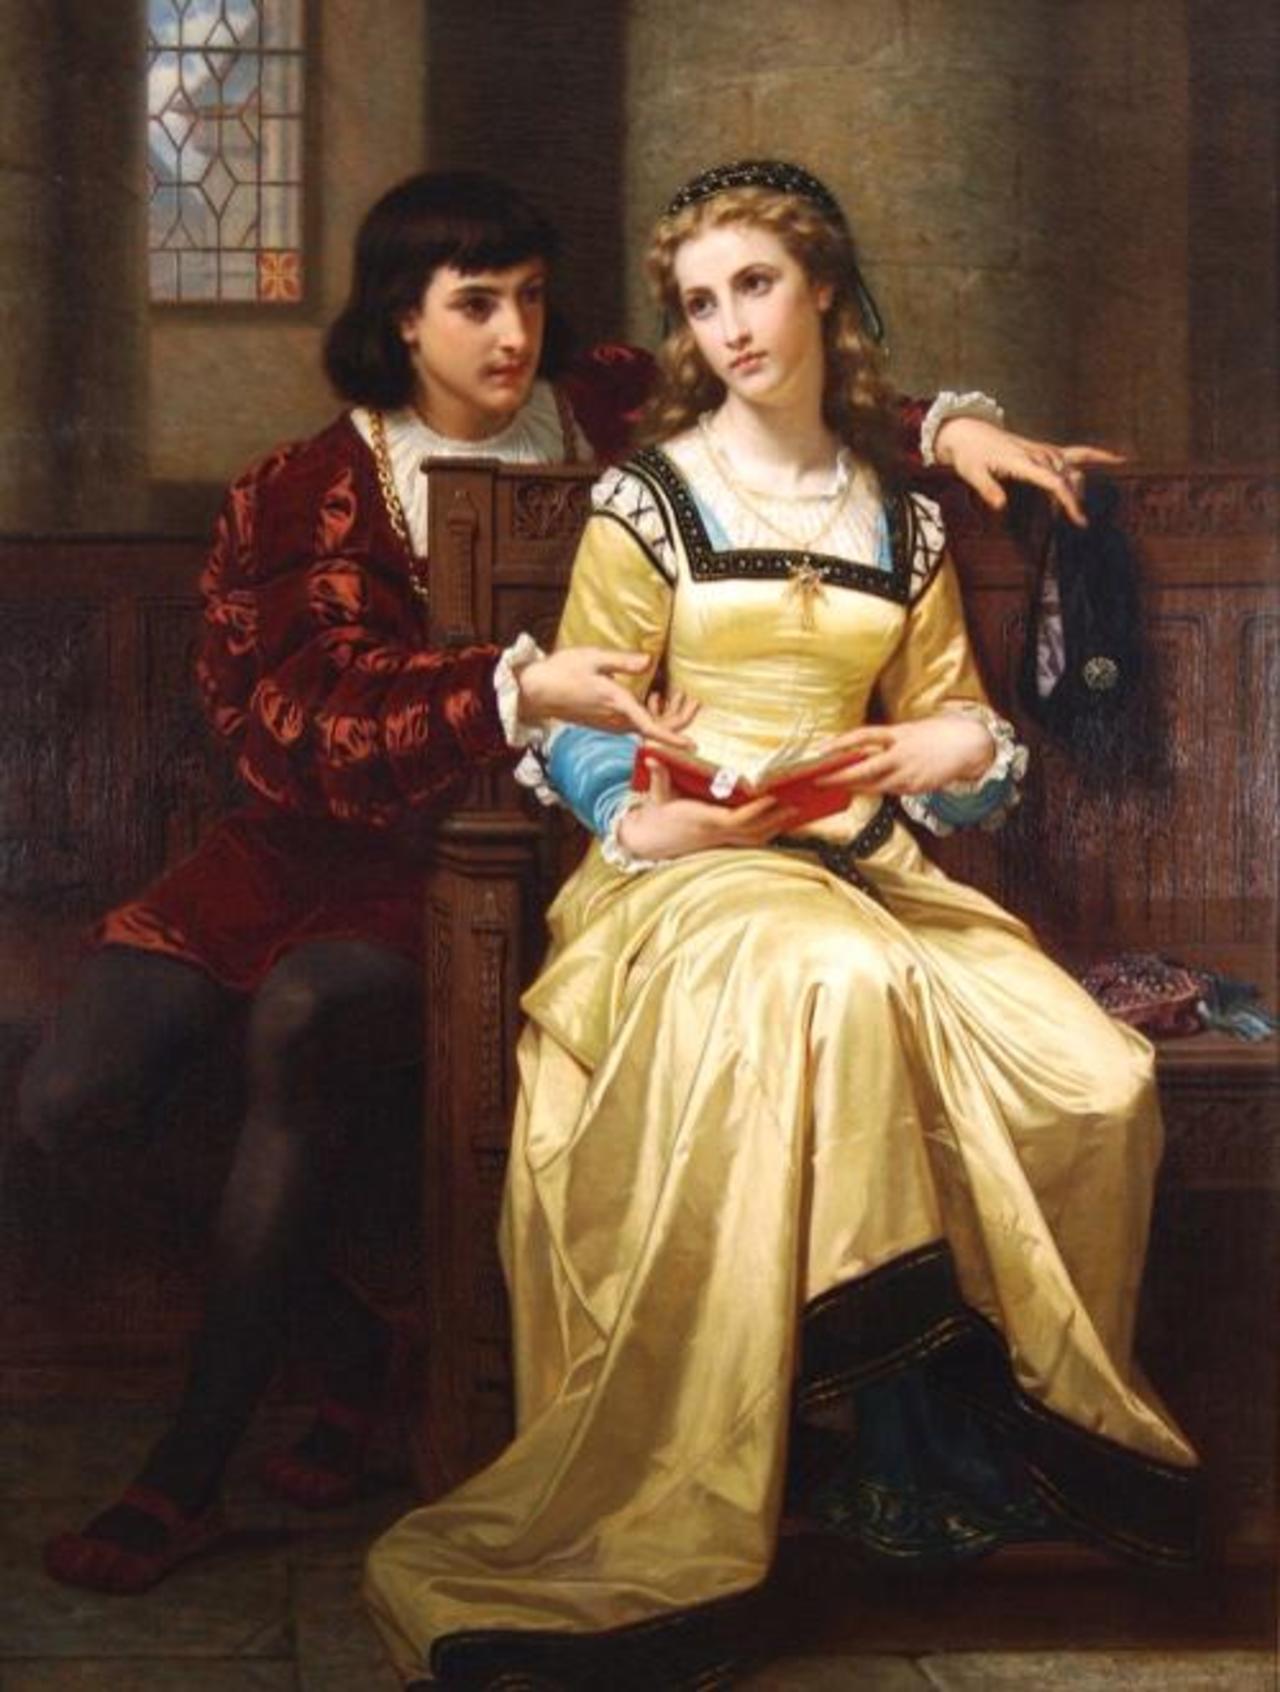 Romeo y Julieta - Hughes Merle #art #painting http://t.co/58zTkW7cob